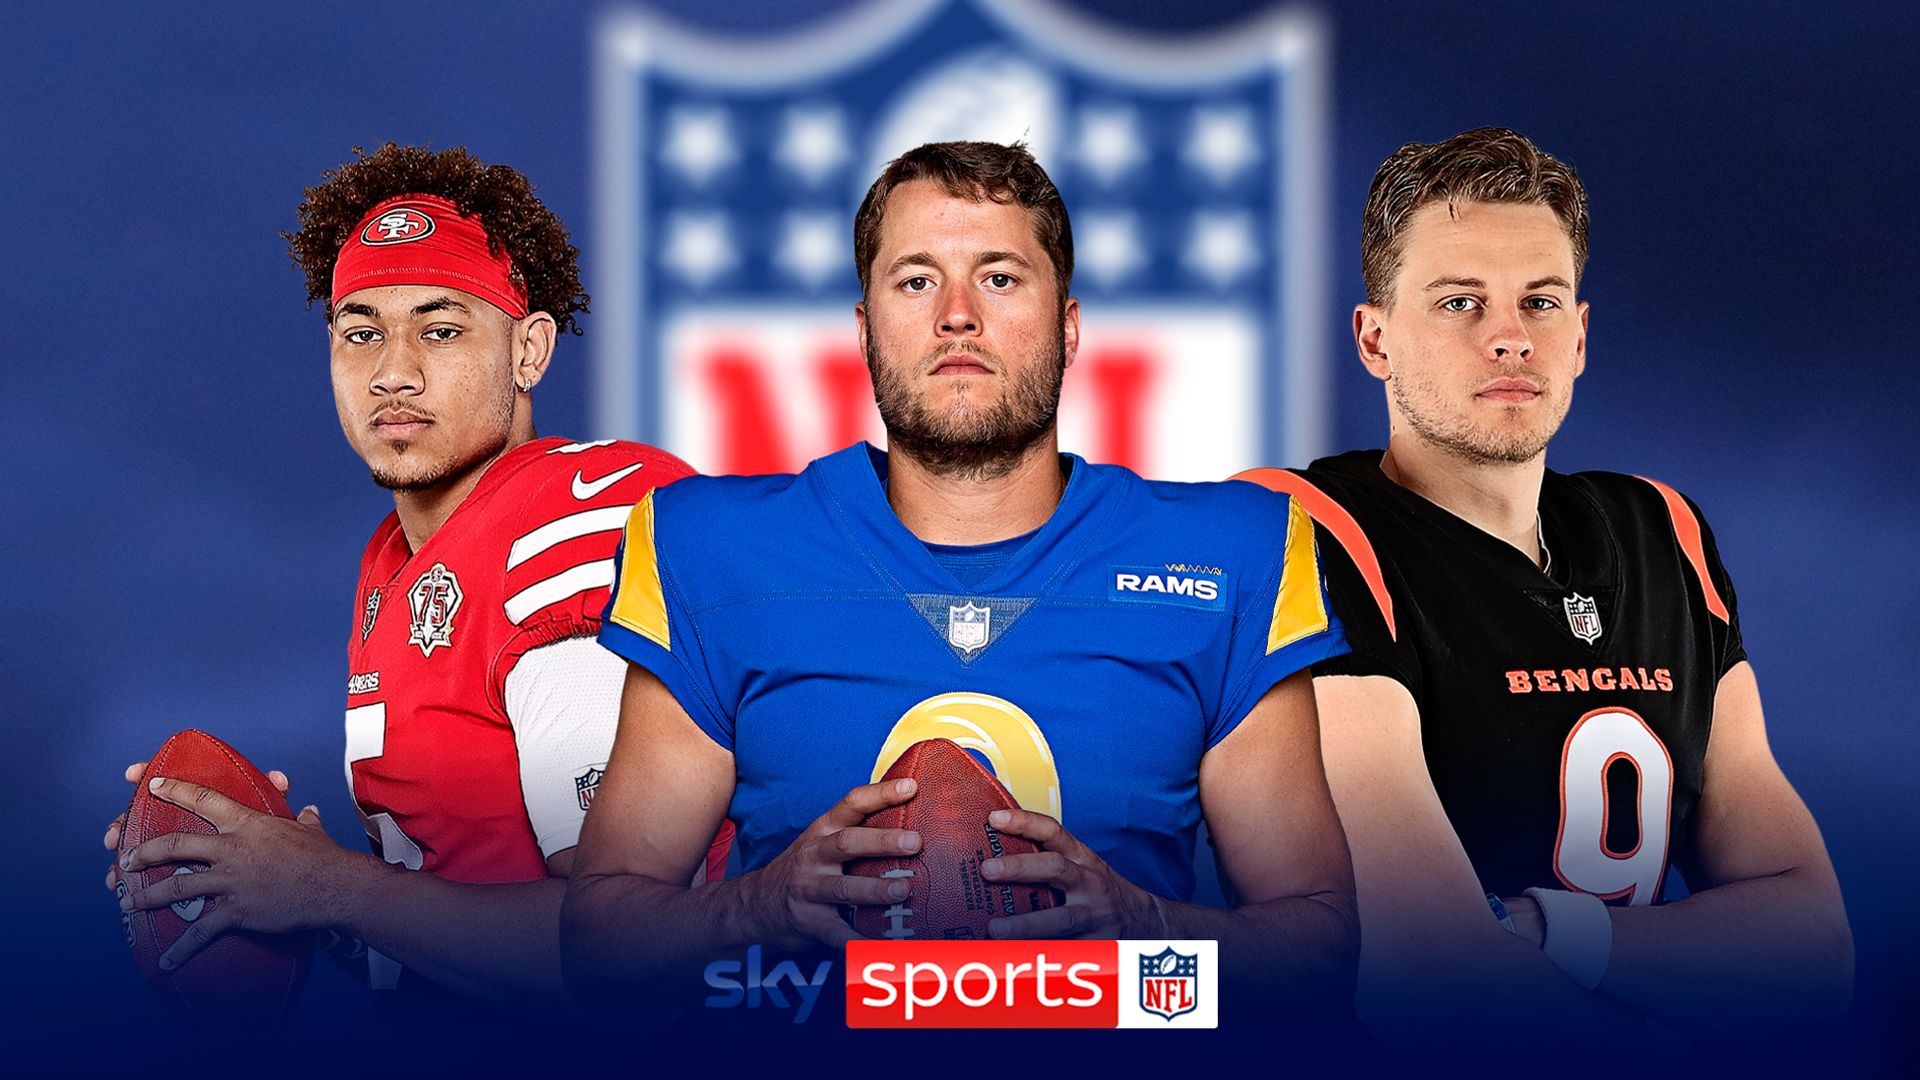 Sky Sports NFL is back for 2022 season!